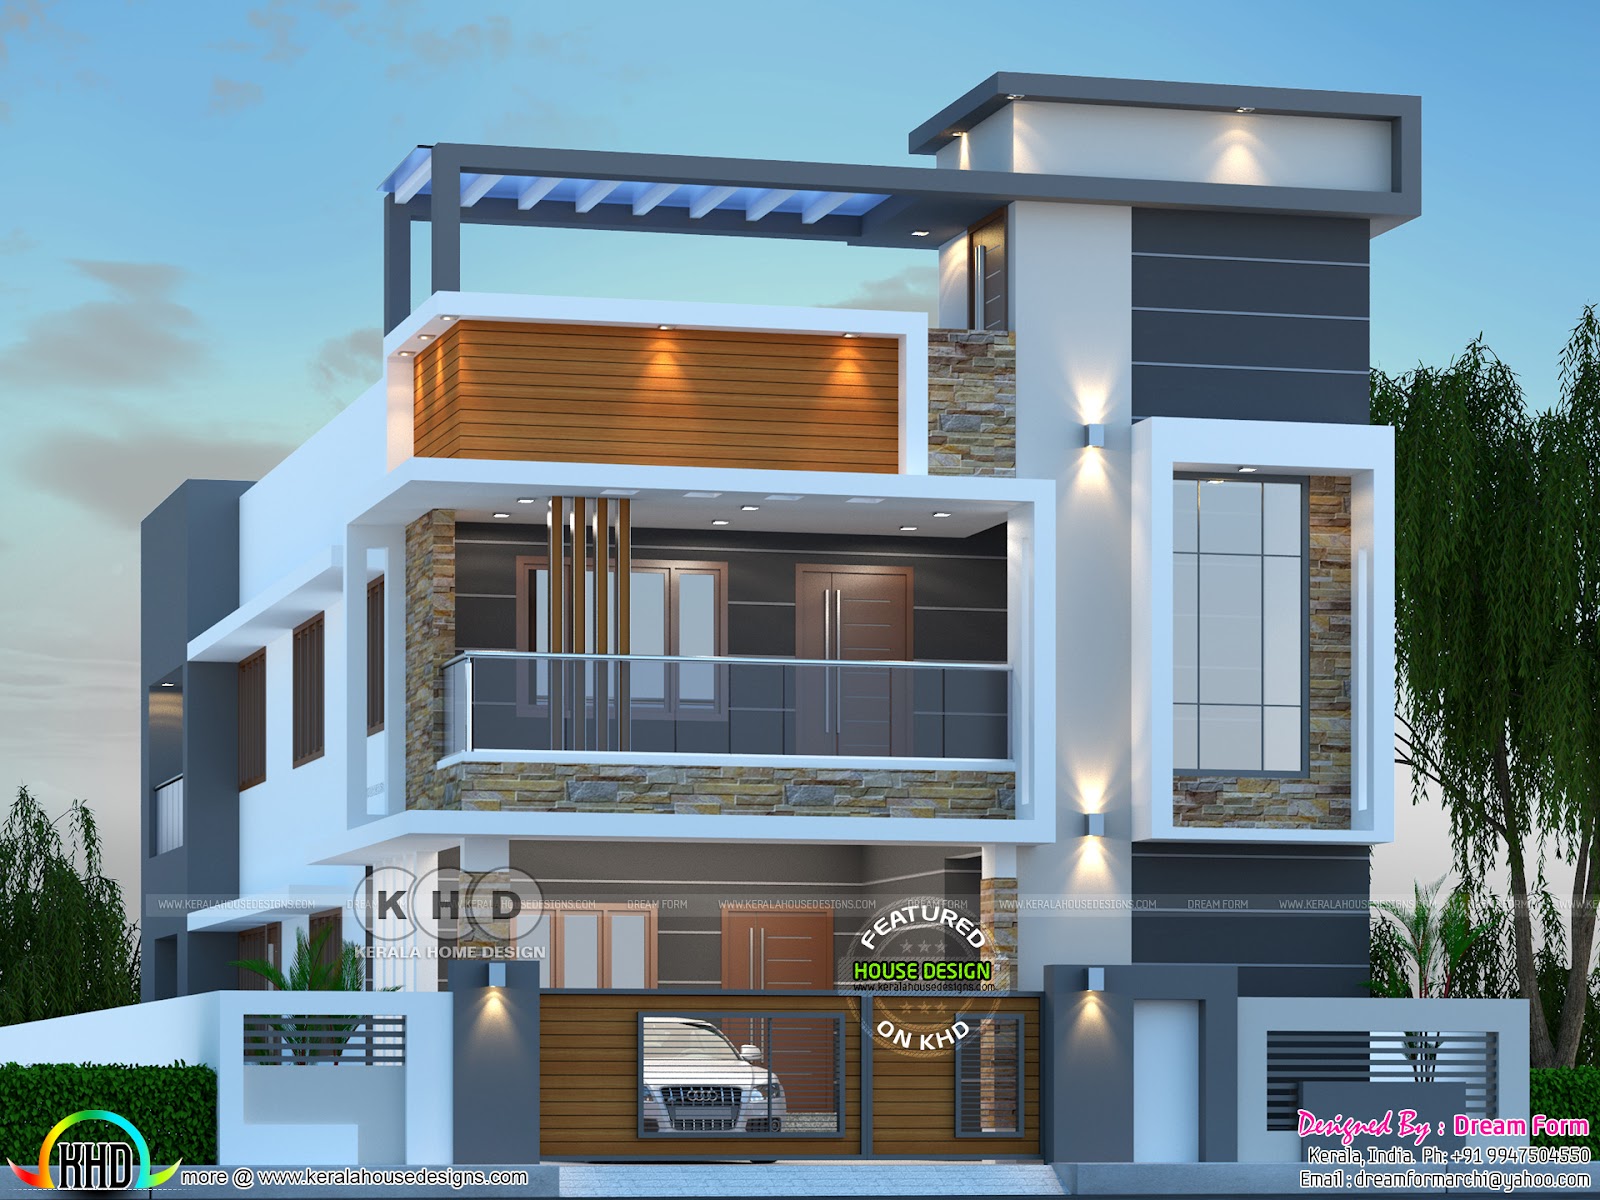 4 Bedrooms 3200 Sq Ft Modern Duplex Home Design Kerala Home Design